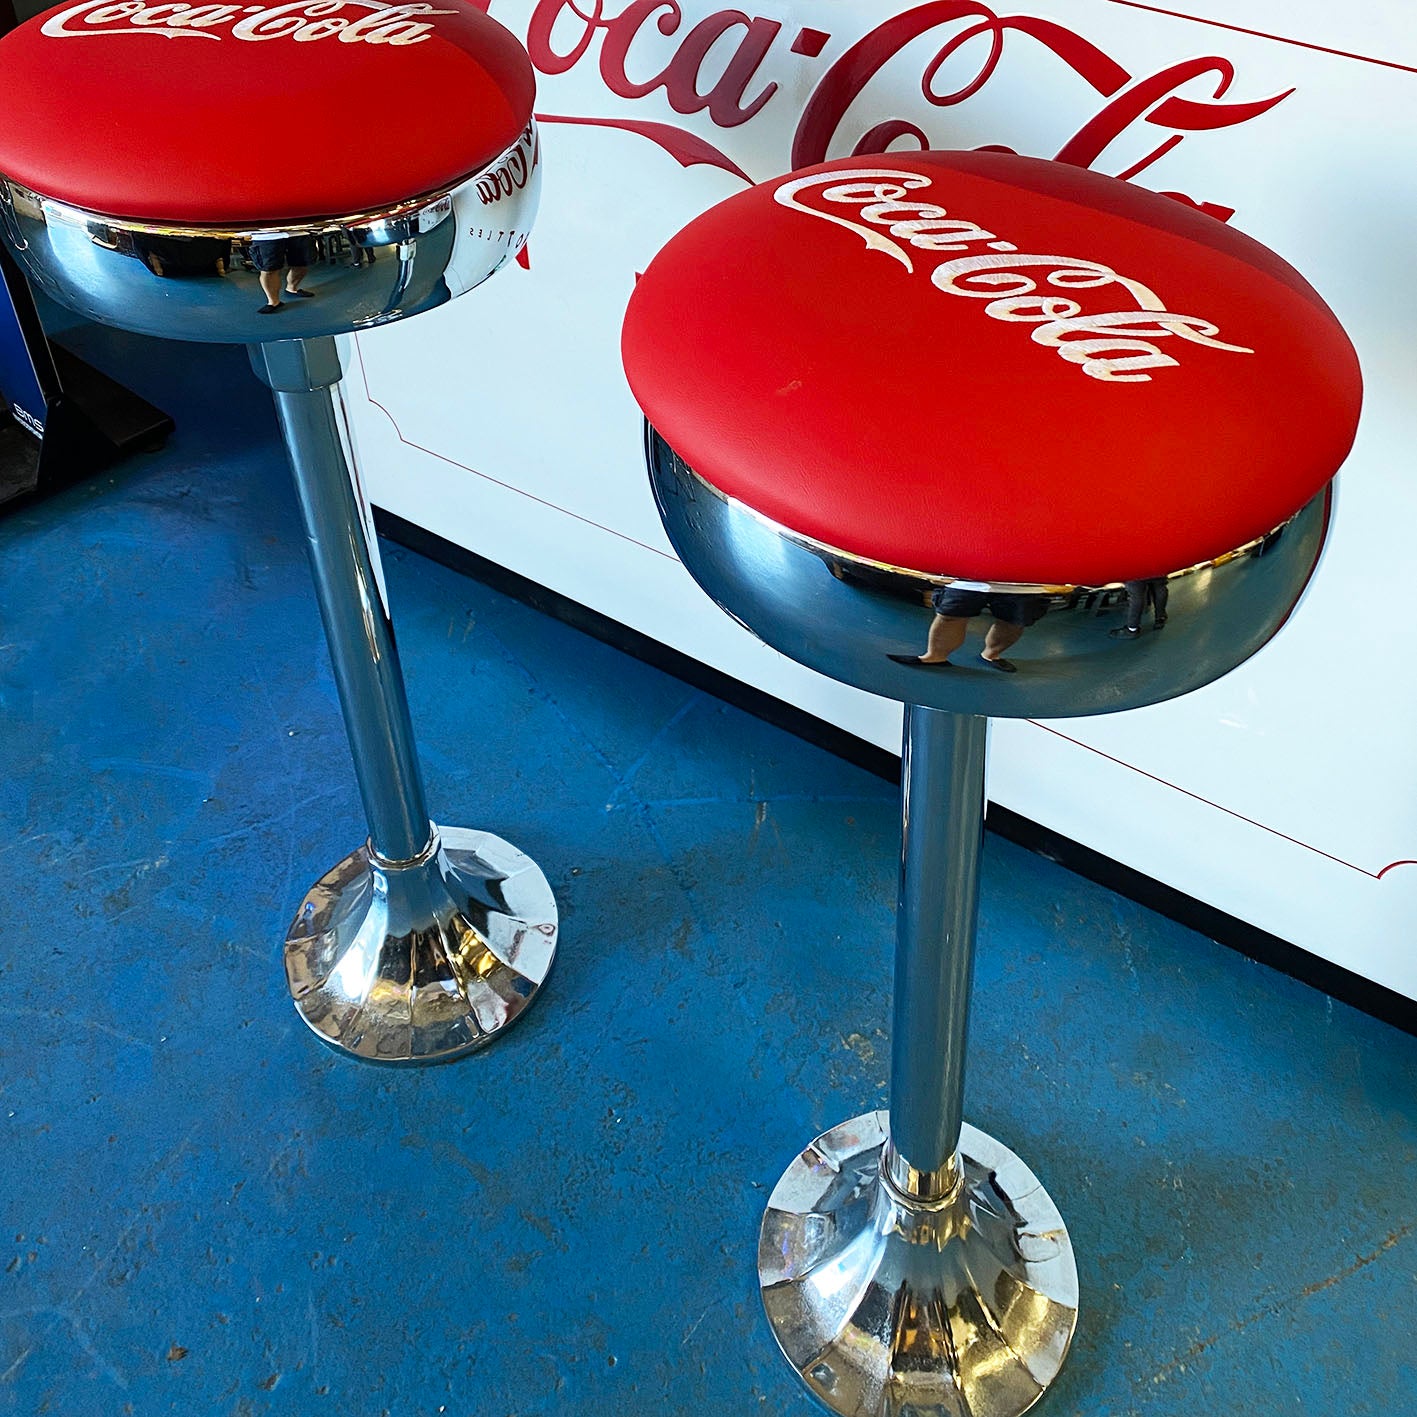 Original 1950s Coca Cola Stool